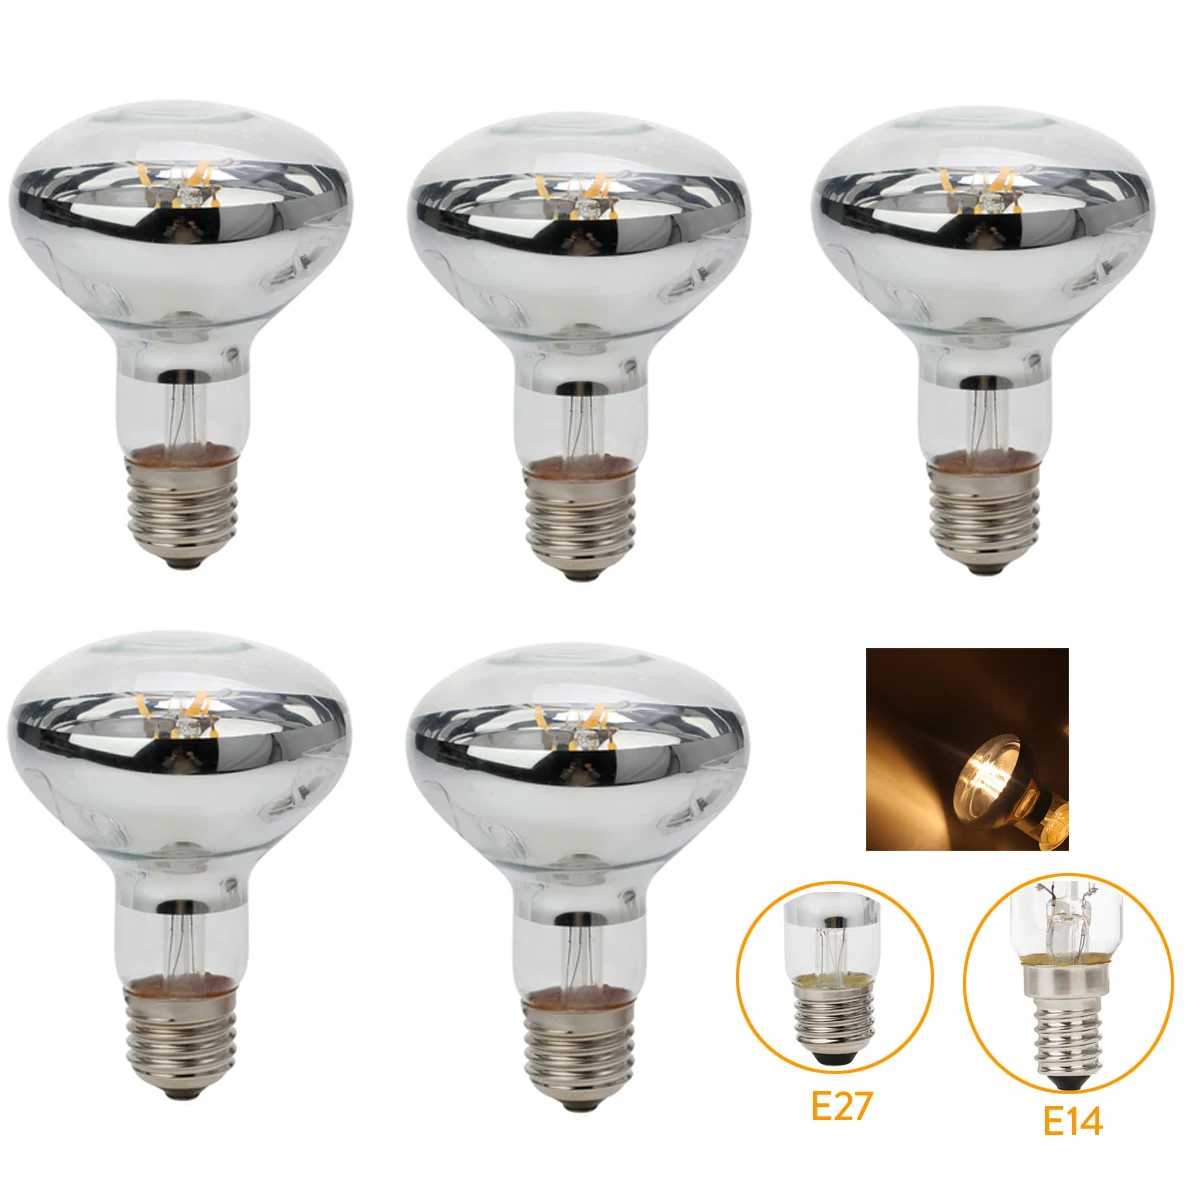 

5PCS E27 E14 Warm White Vintage Edison Filament COB LED Bulbs R50 R63 R80 3W 4W 5W Replace Halogen 30W 40W 50W 220V Light Lamps